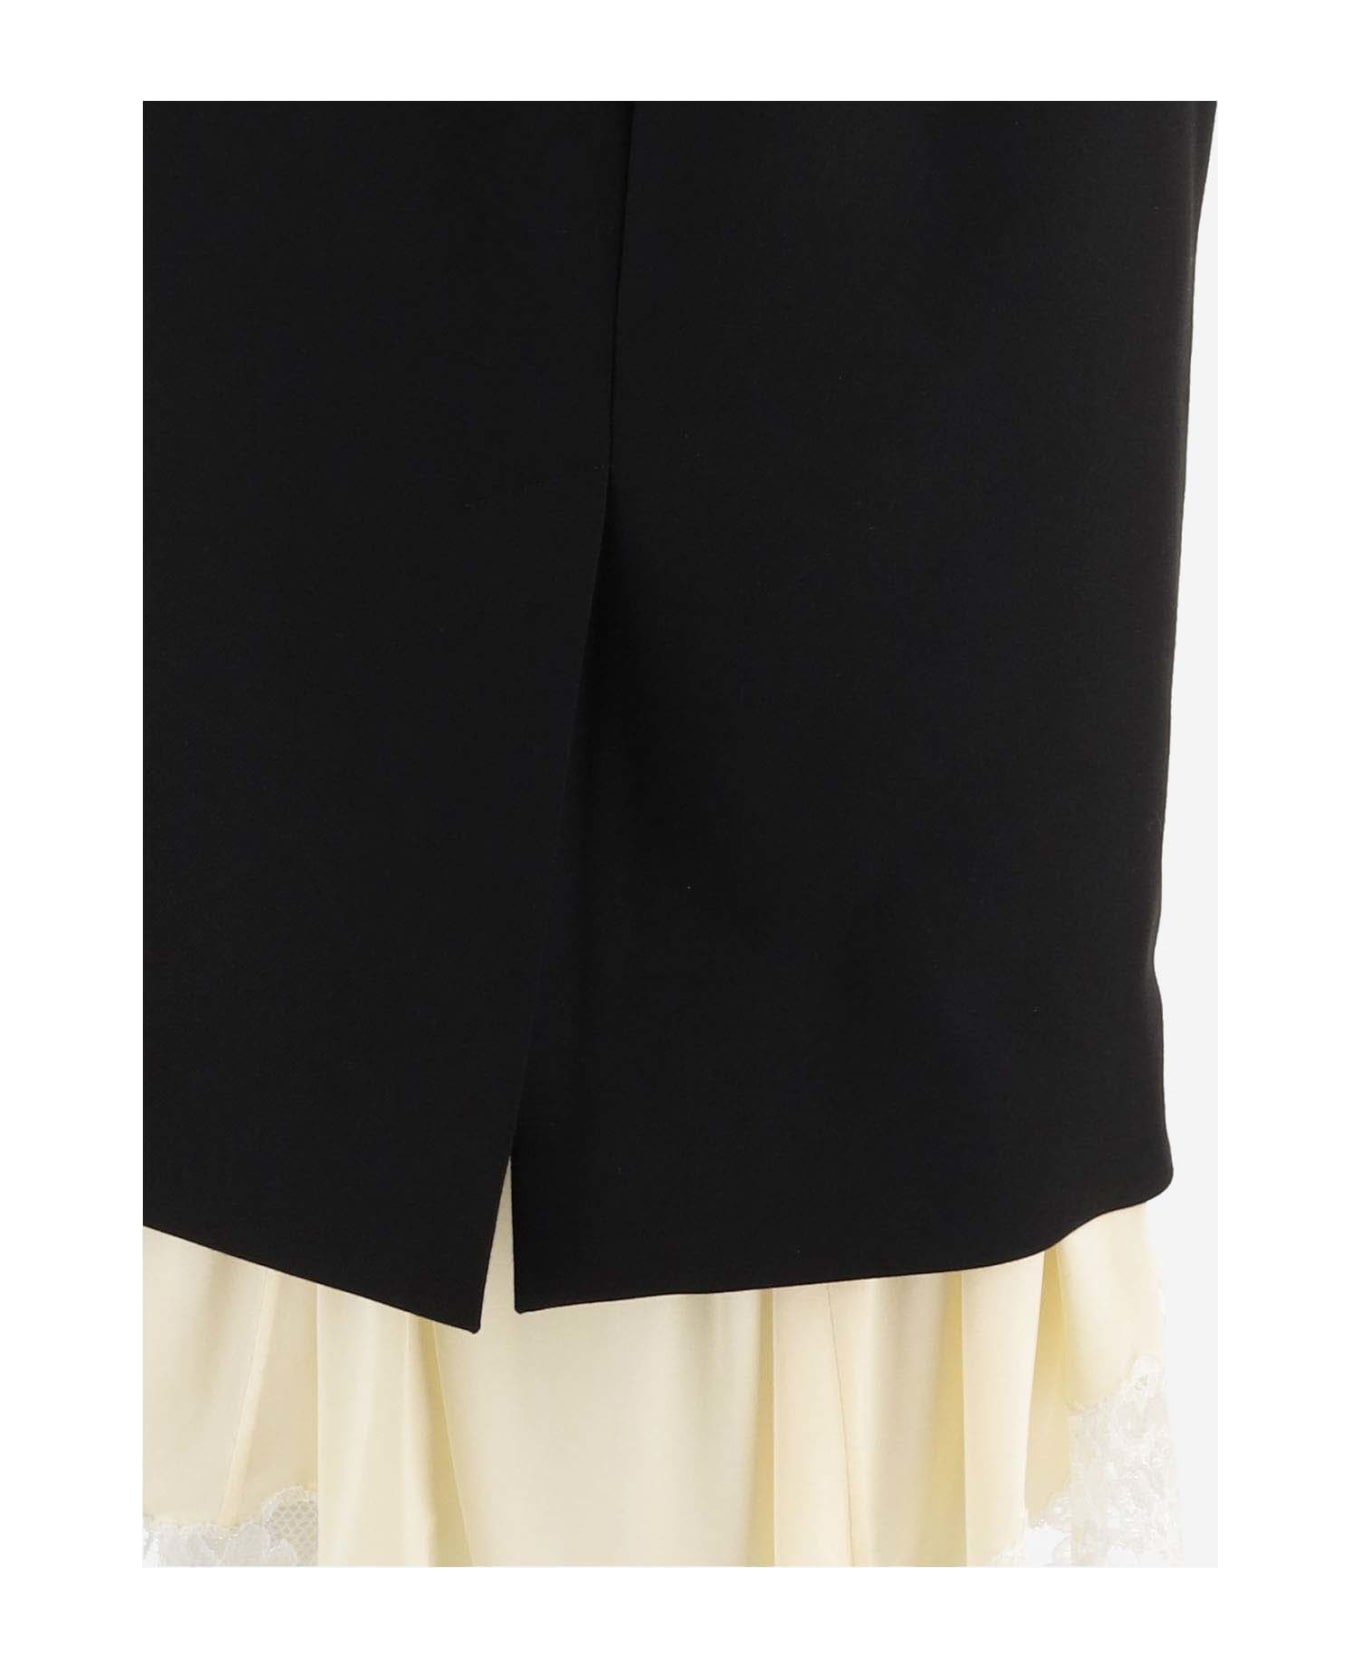 Balenciaga Wool Tailored Lingerie Skirt - Black